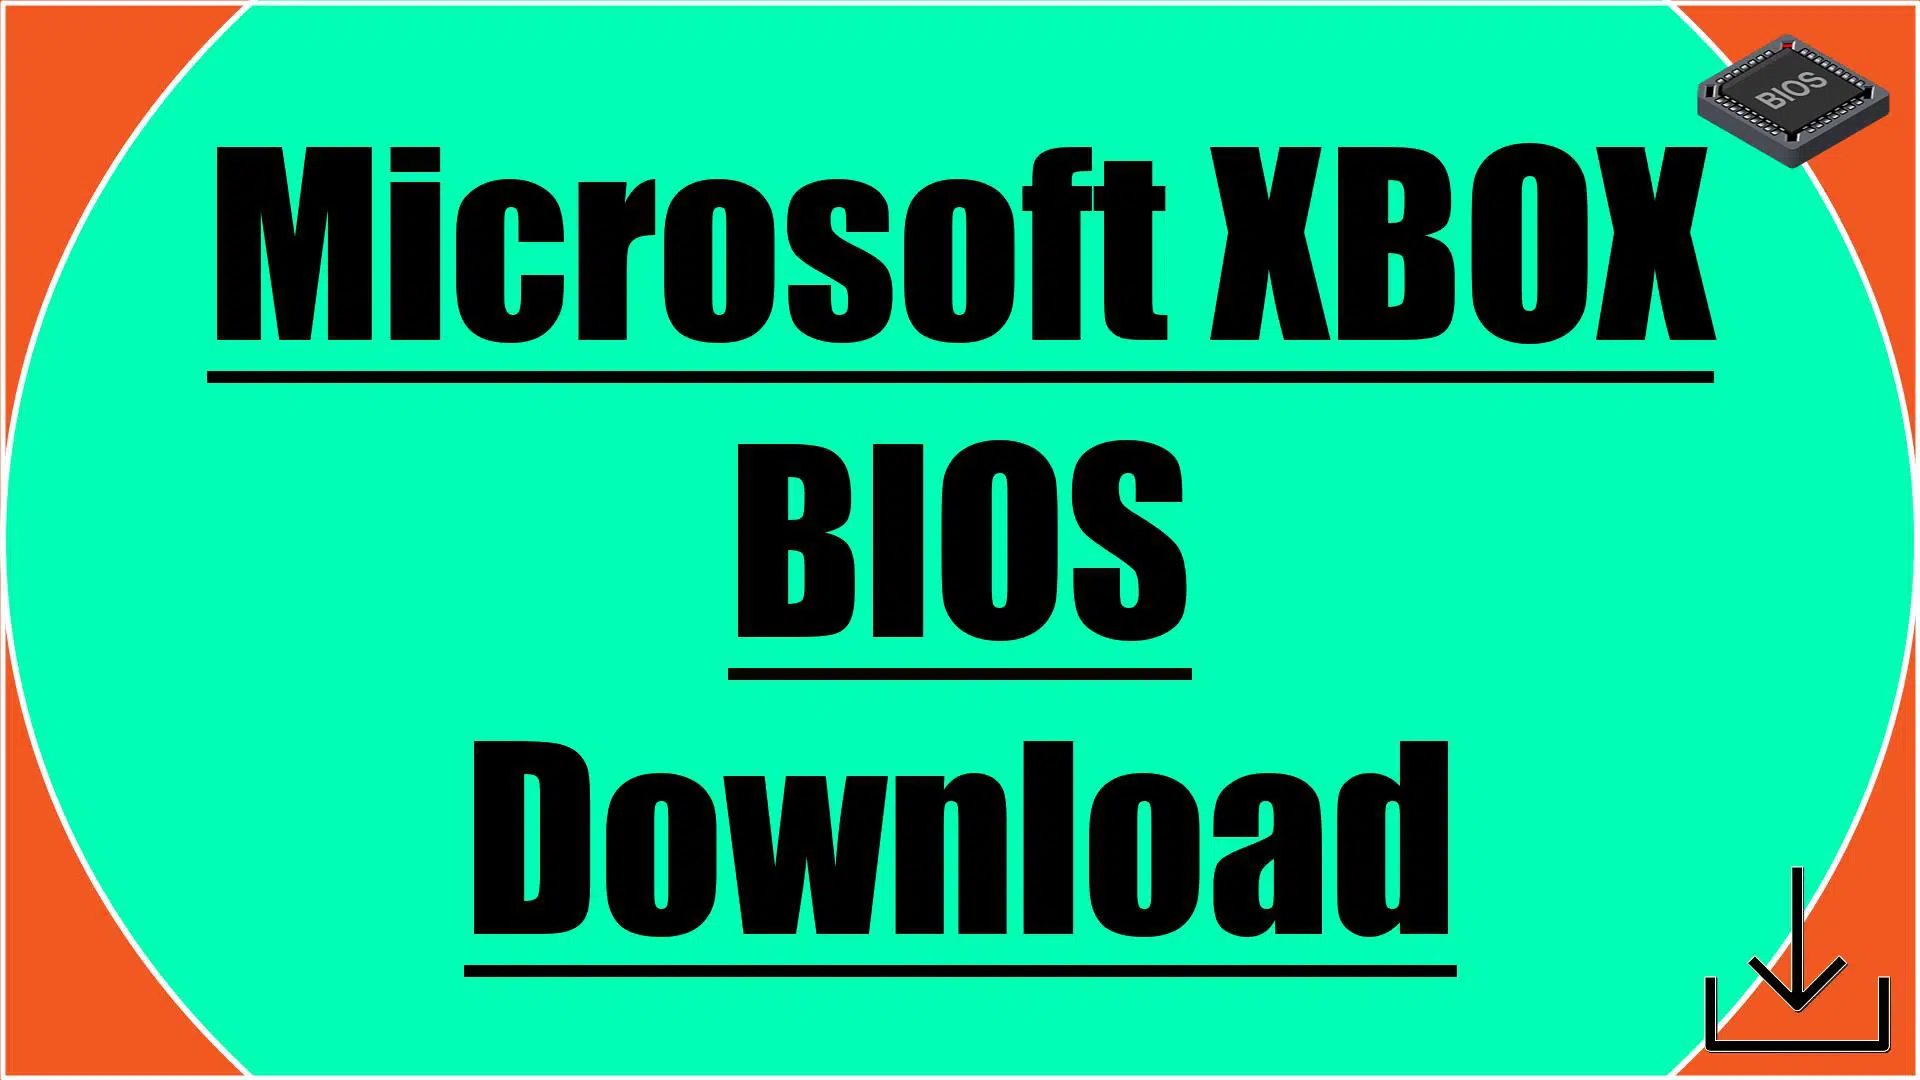 Microsoft XBOX BIOS Download